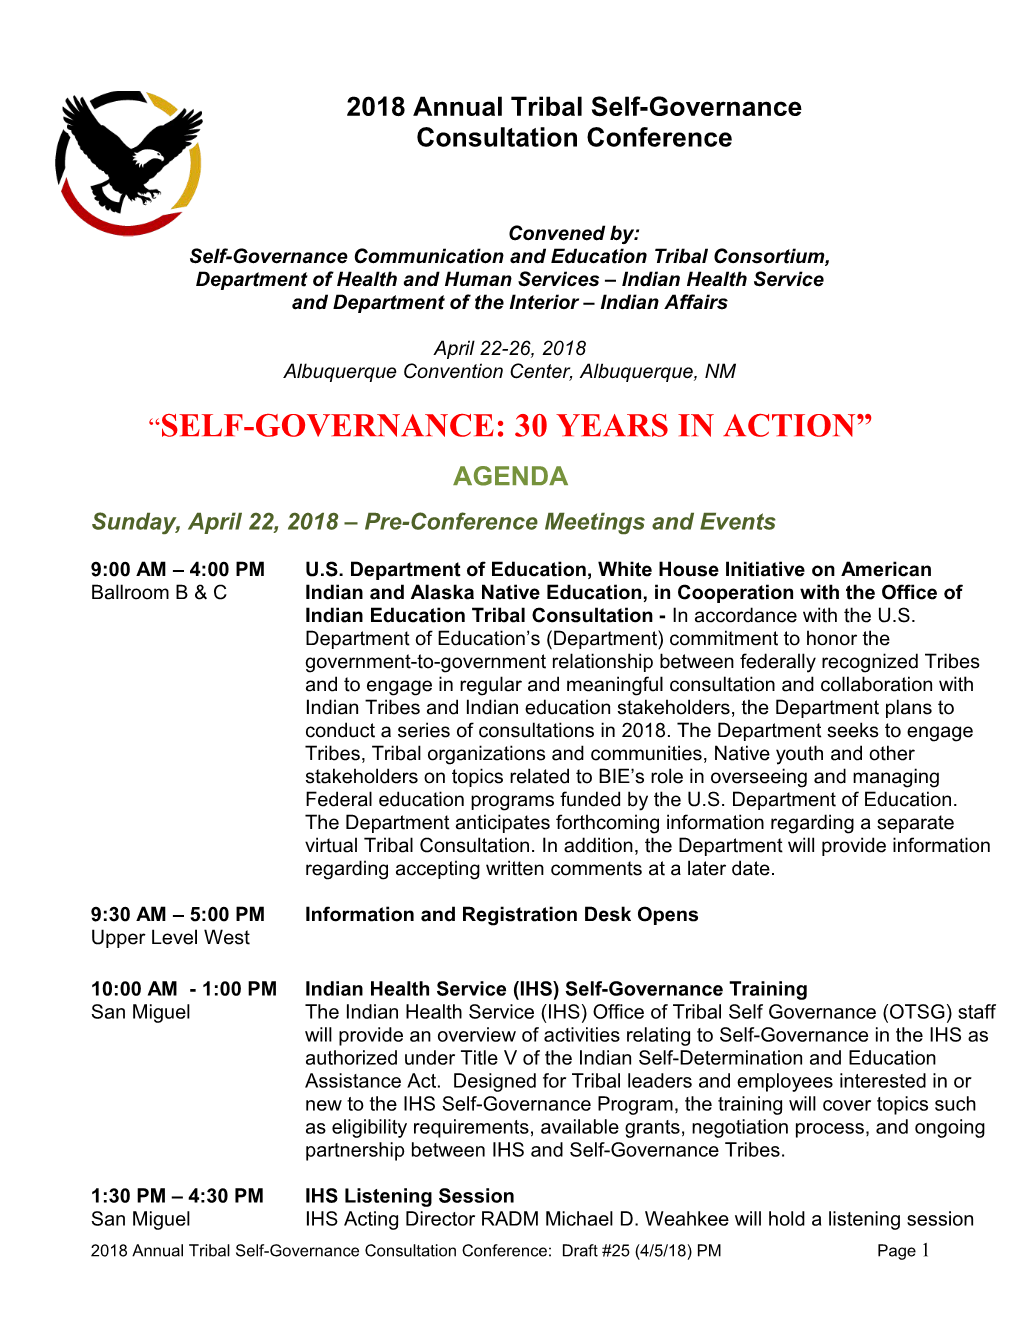 Self-Governance Communication and Education Tribal Consortium